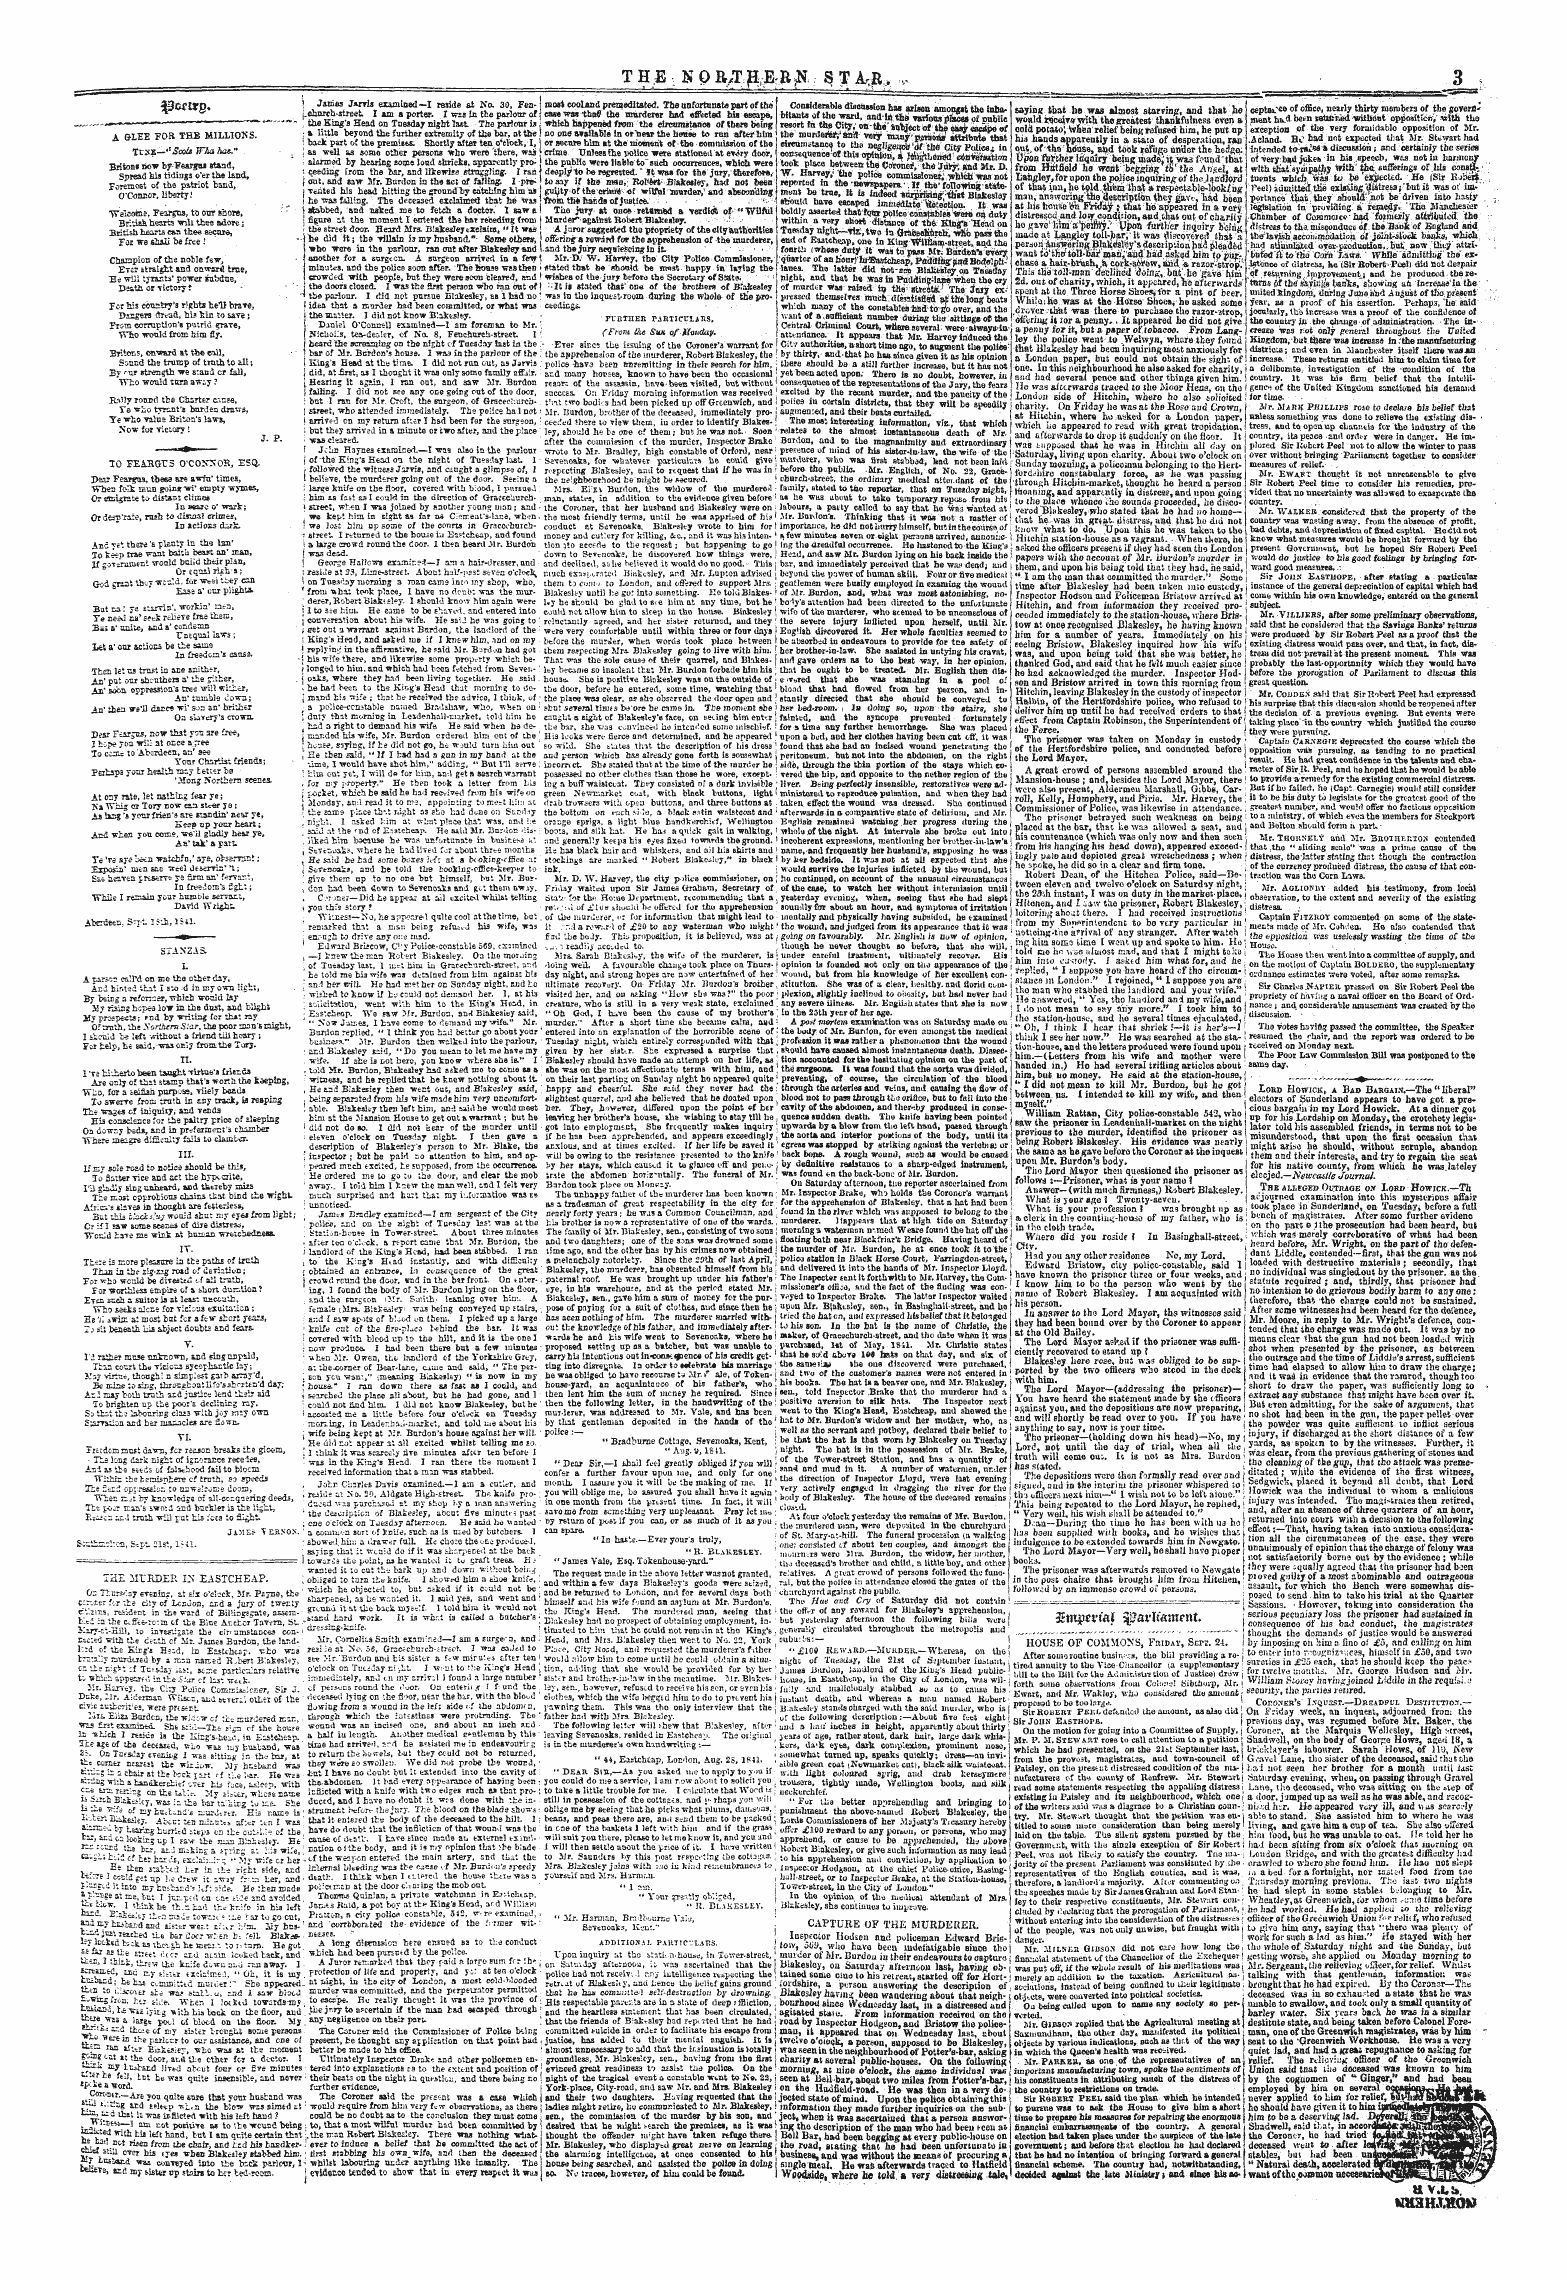 Northern Star (1837-1852): jS F Y, 1st edition - Smp-Ma? ^Avu&Ment.